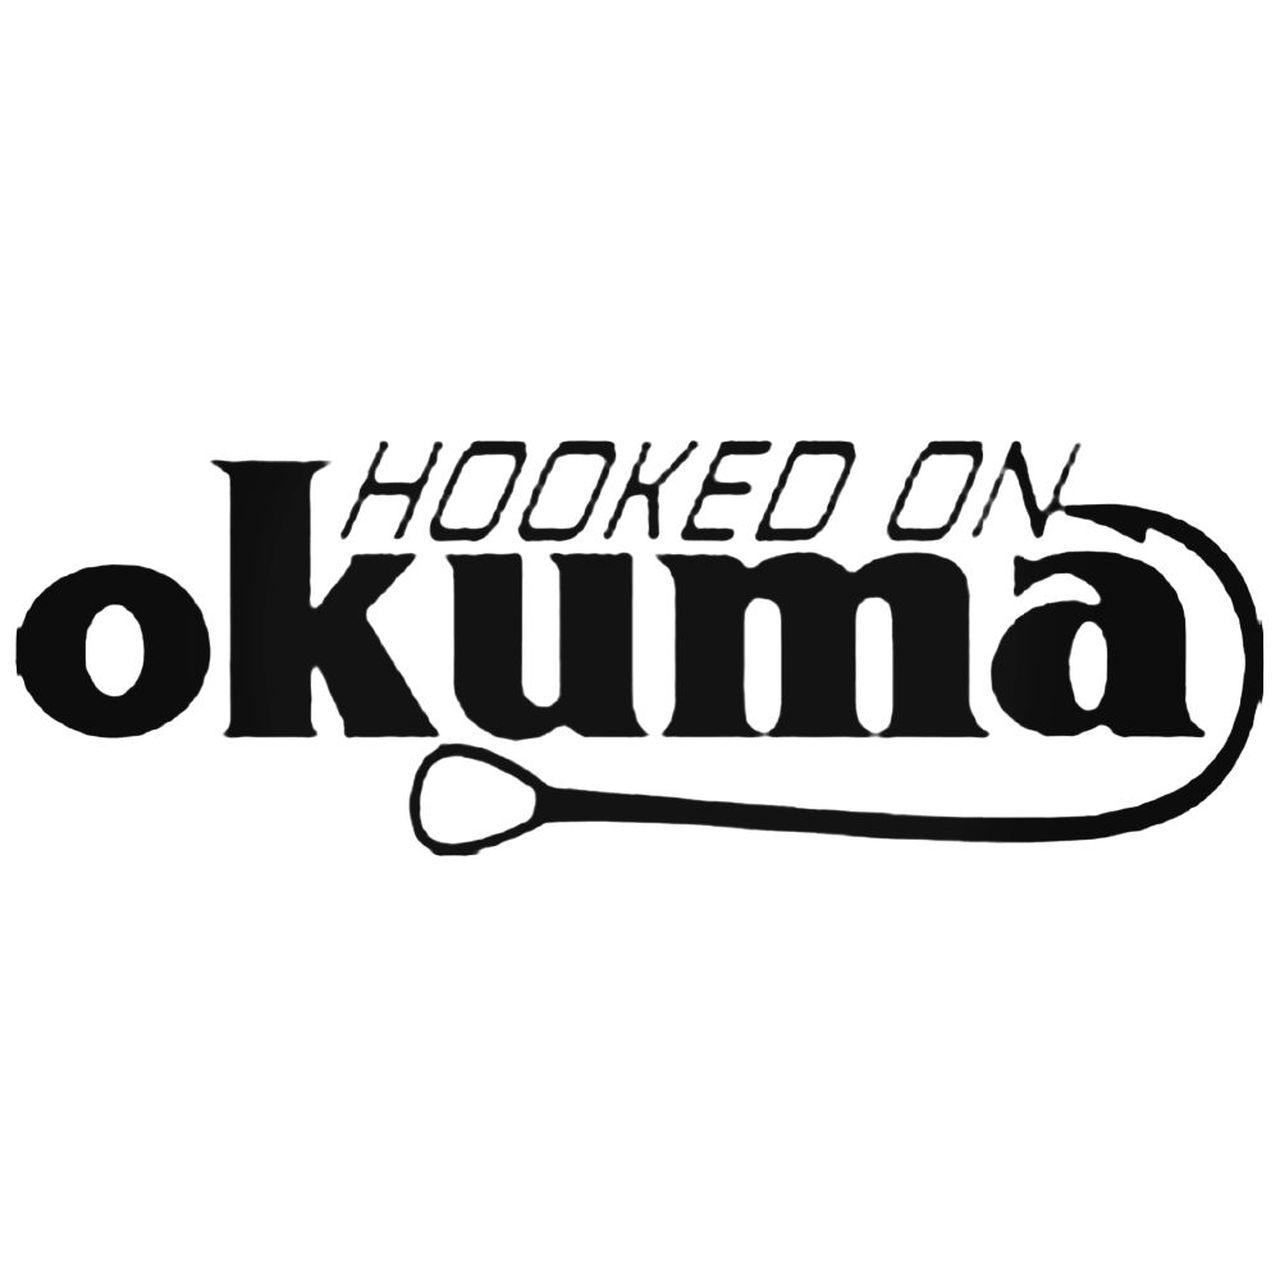 Okuma Logo - Hooked On Okuma Fishing Die Cut Decal Sticker